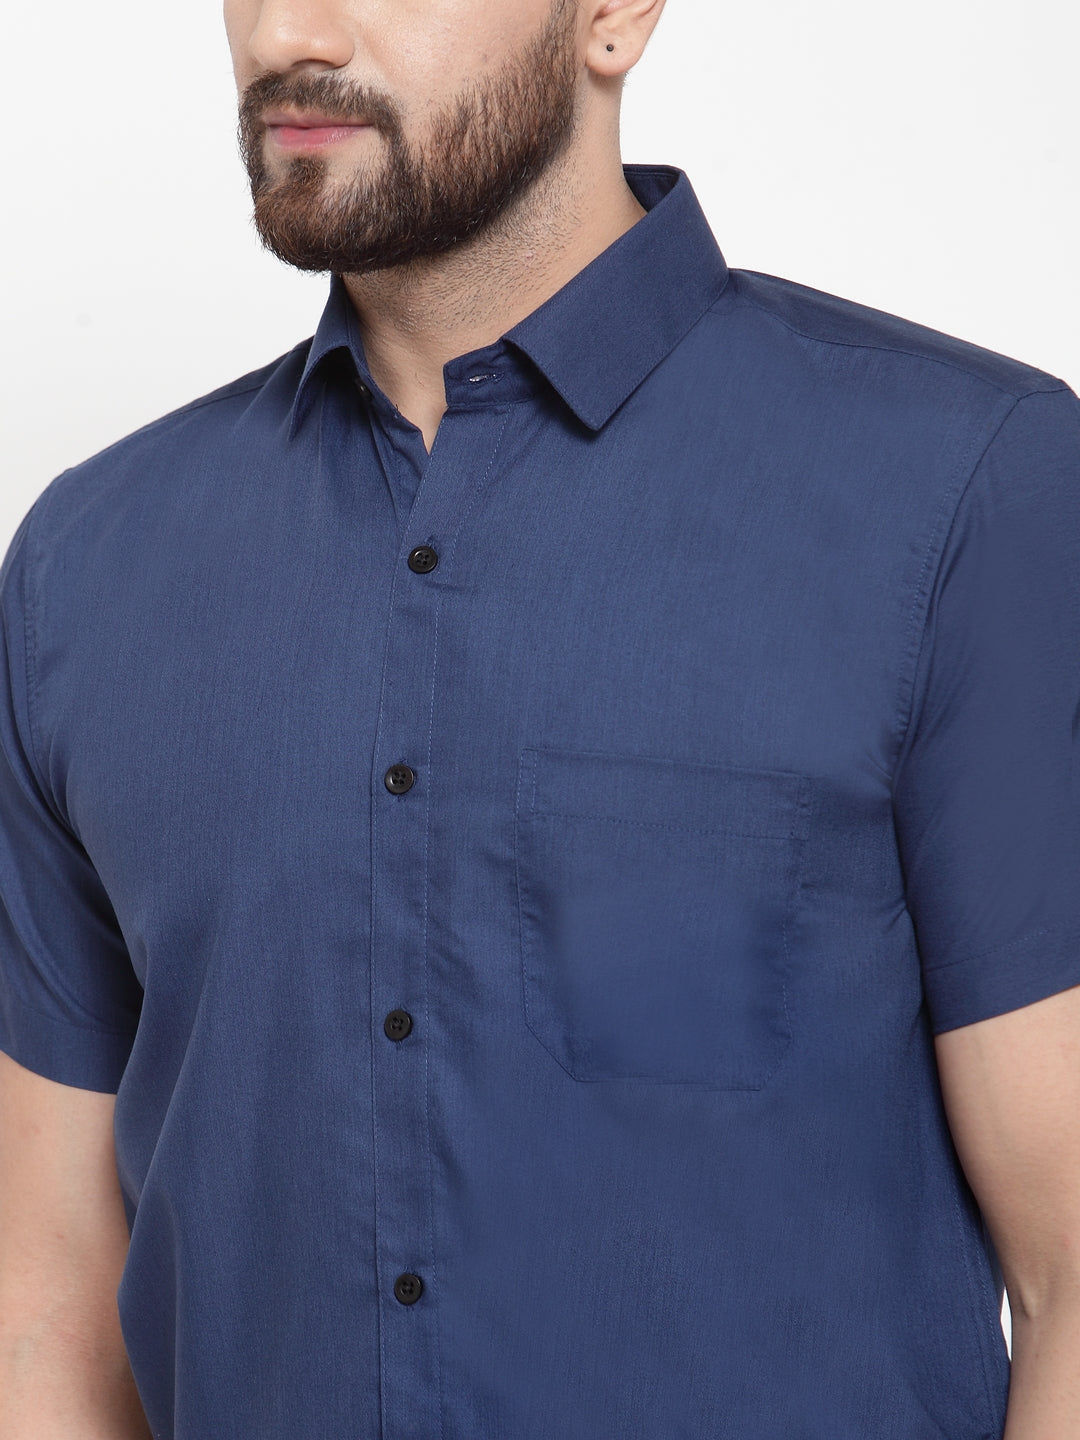 Men's Blue Cotton Half Sleeves Solid Formal Shirts ( SF 754Peacock ) - Jainish